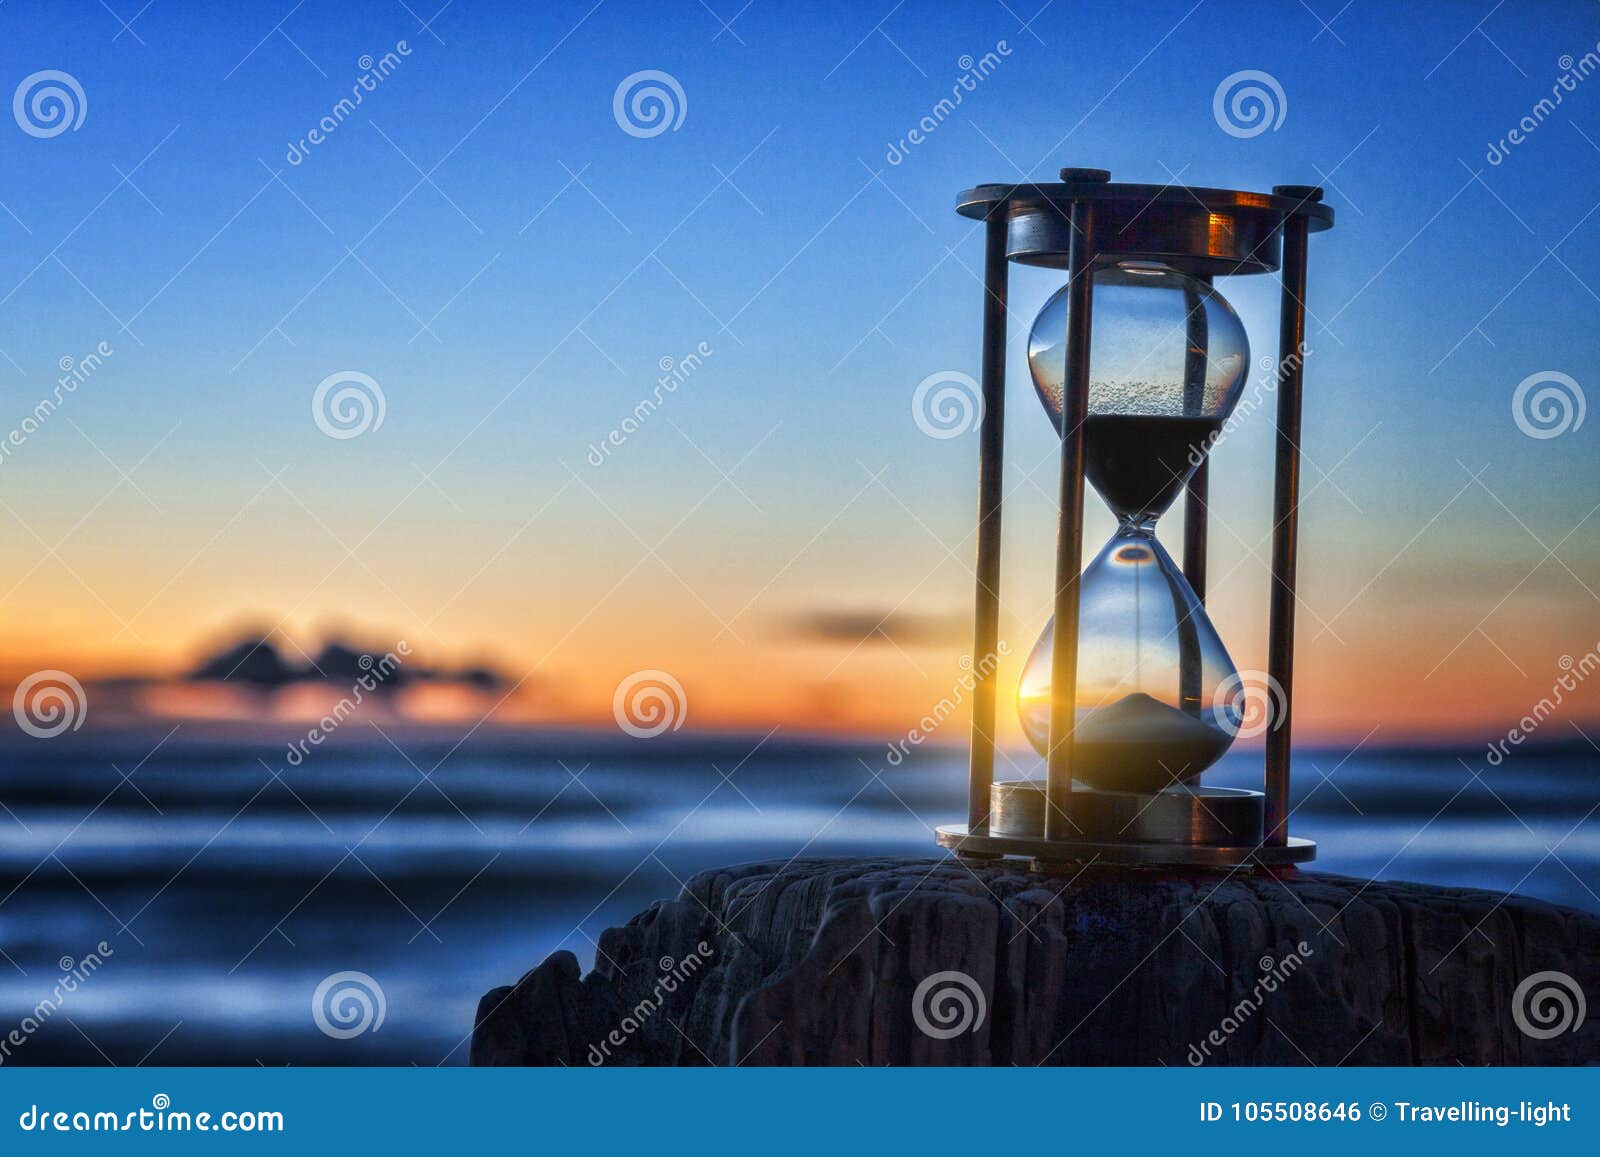 hourglass sunrise outdoors